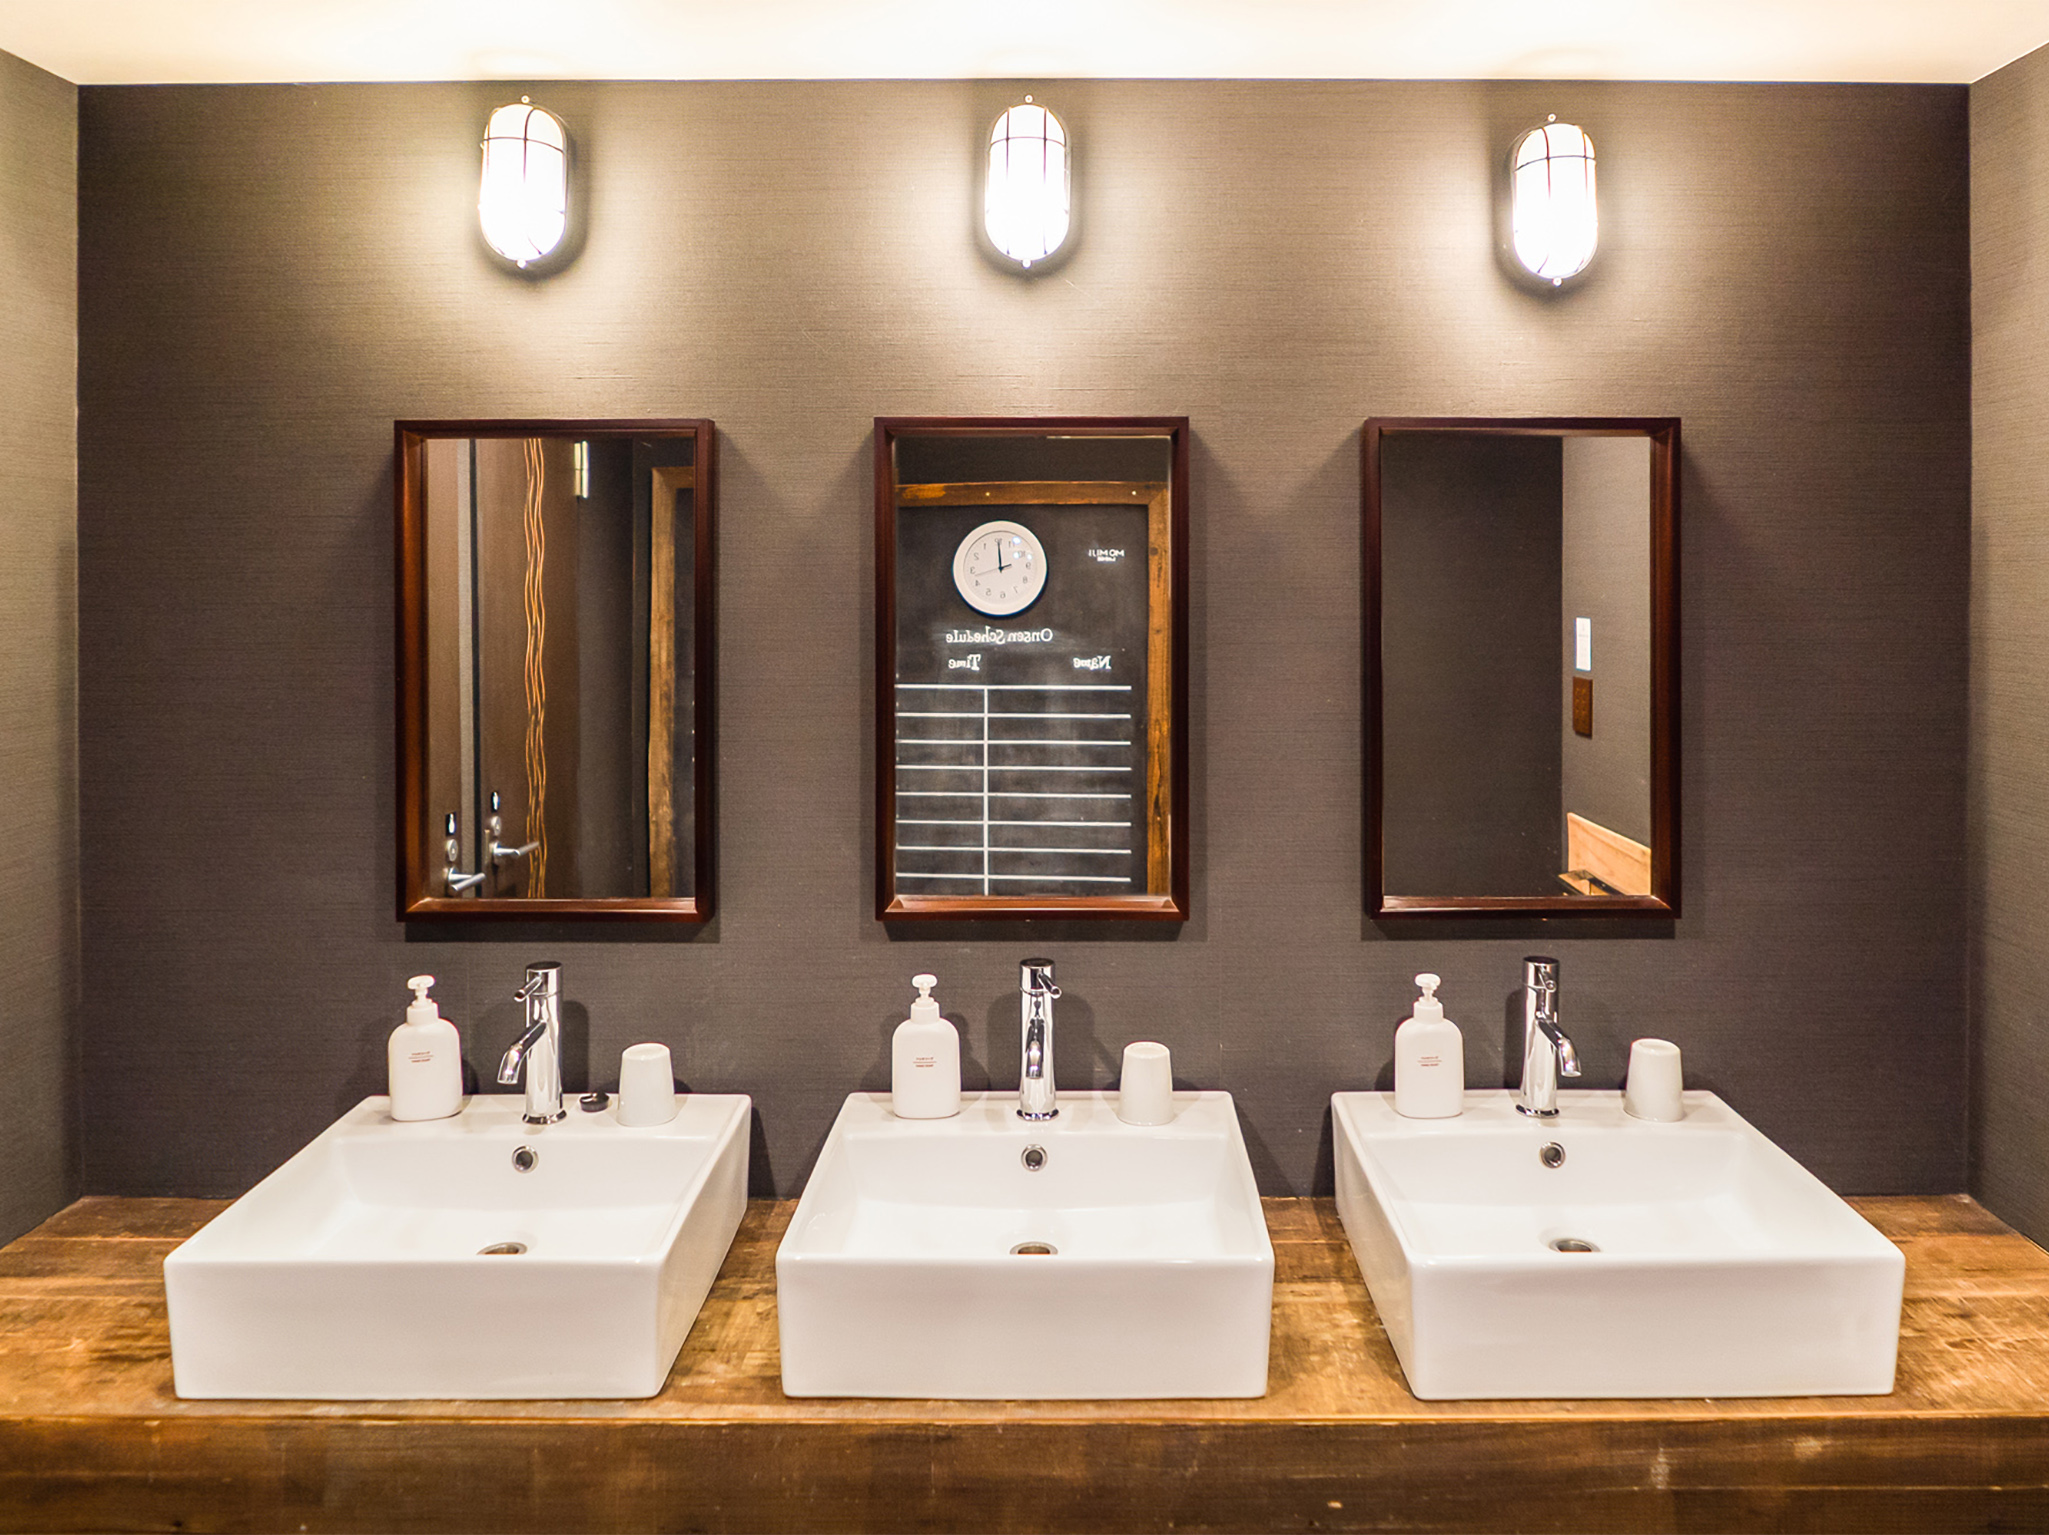 Momiji Lodge - Bathroom with three sinks